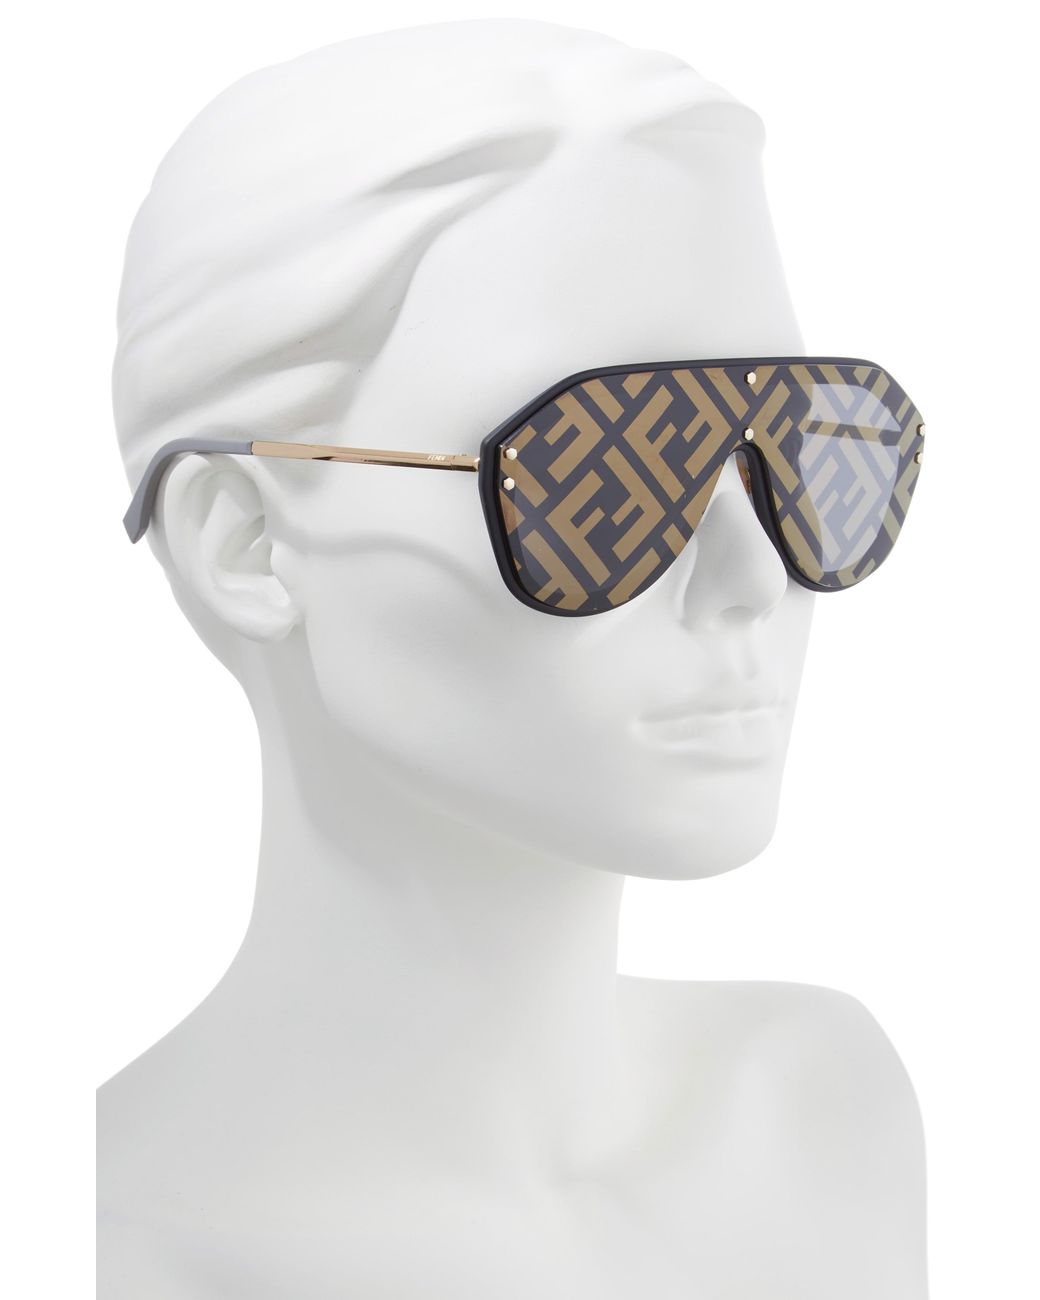 fendi sunglasses with logo on lens